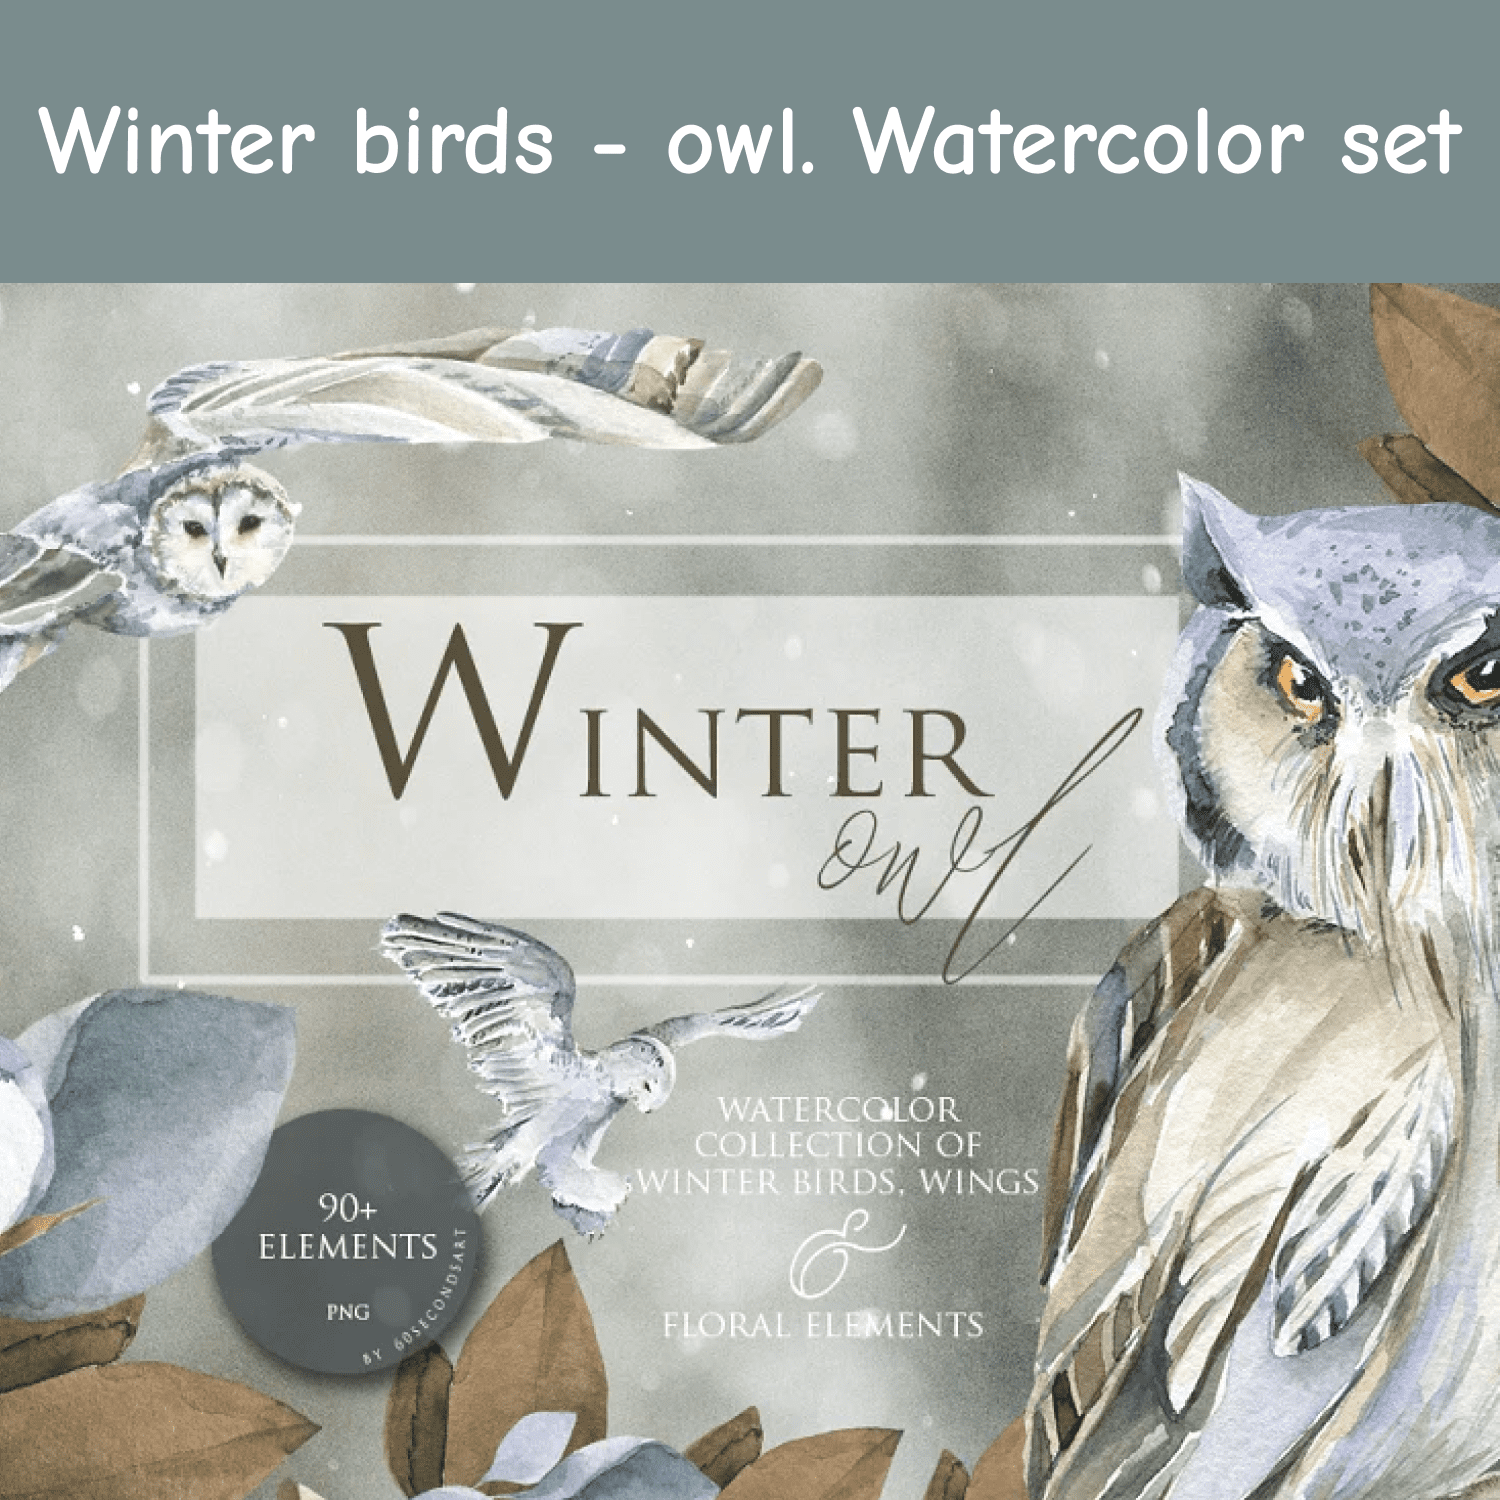 Winter birds - owl. Watercolor set cover.